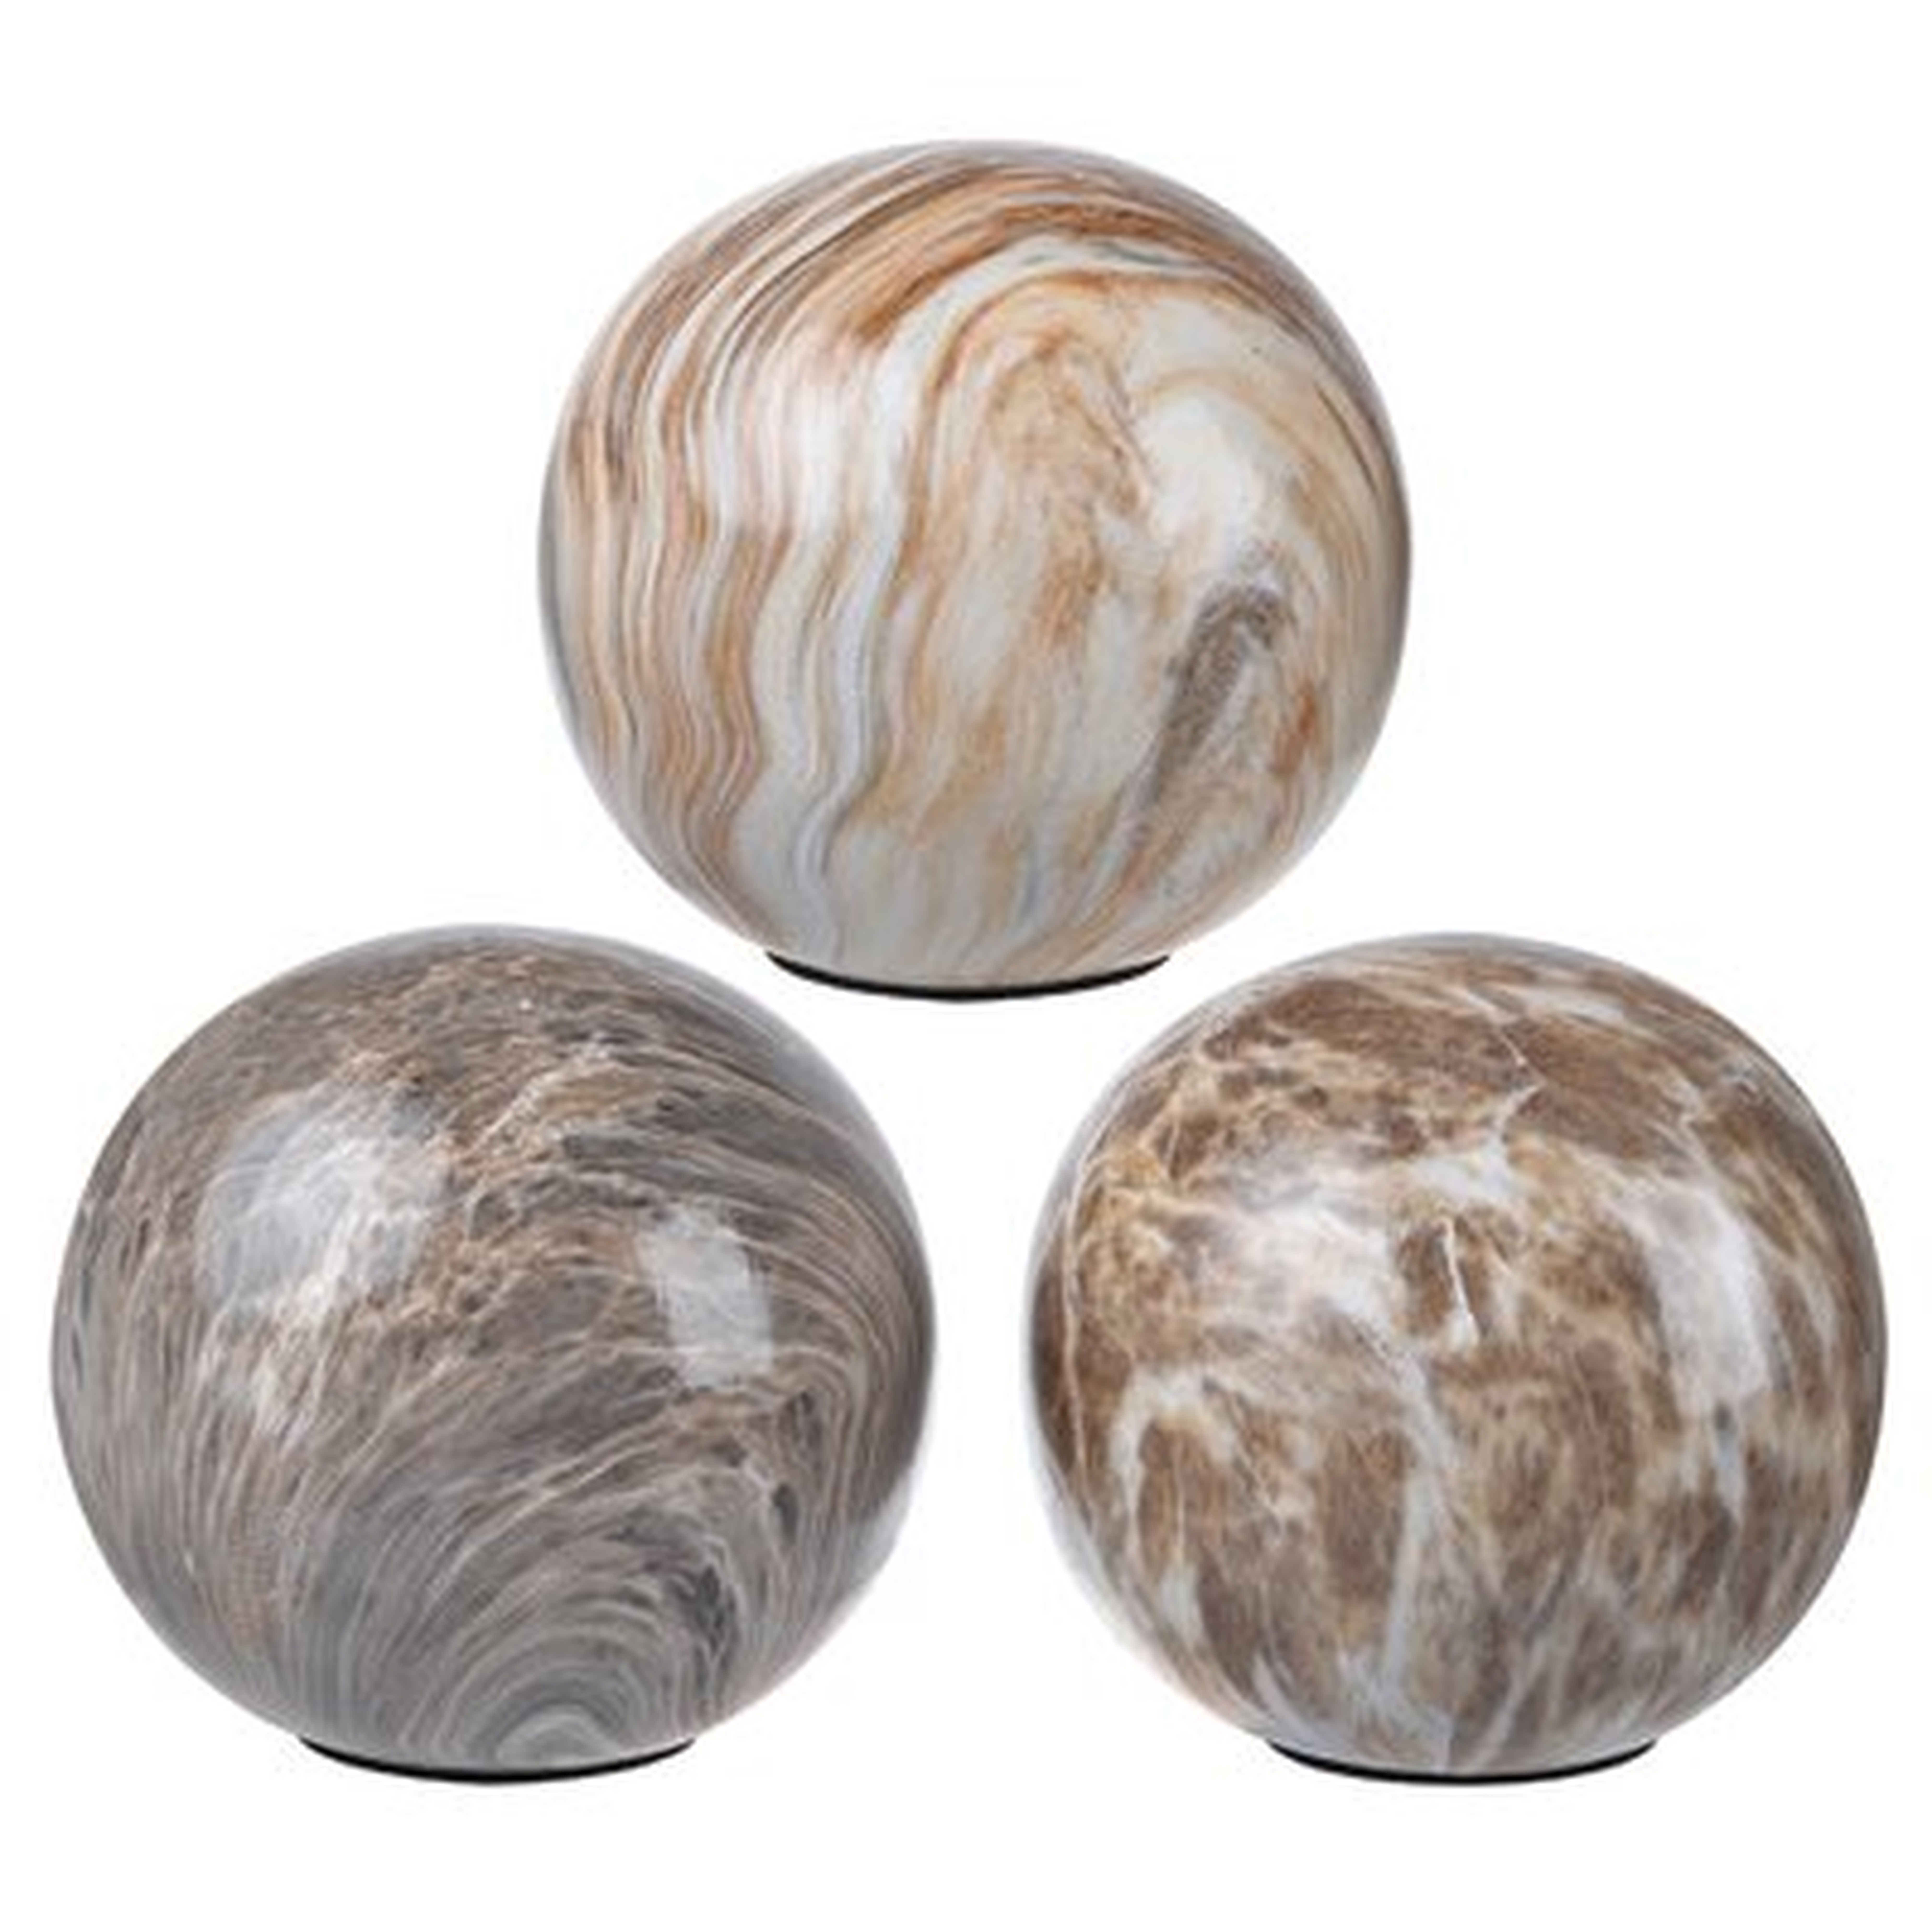 3 Piece Imaani Marbleized Ball Accents Sculpture Set In Stock 7/7 - Wayfair